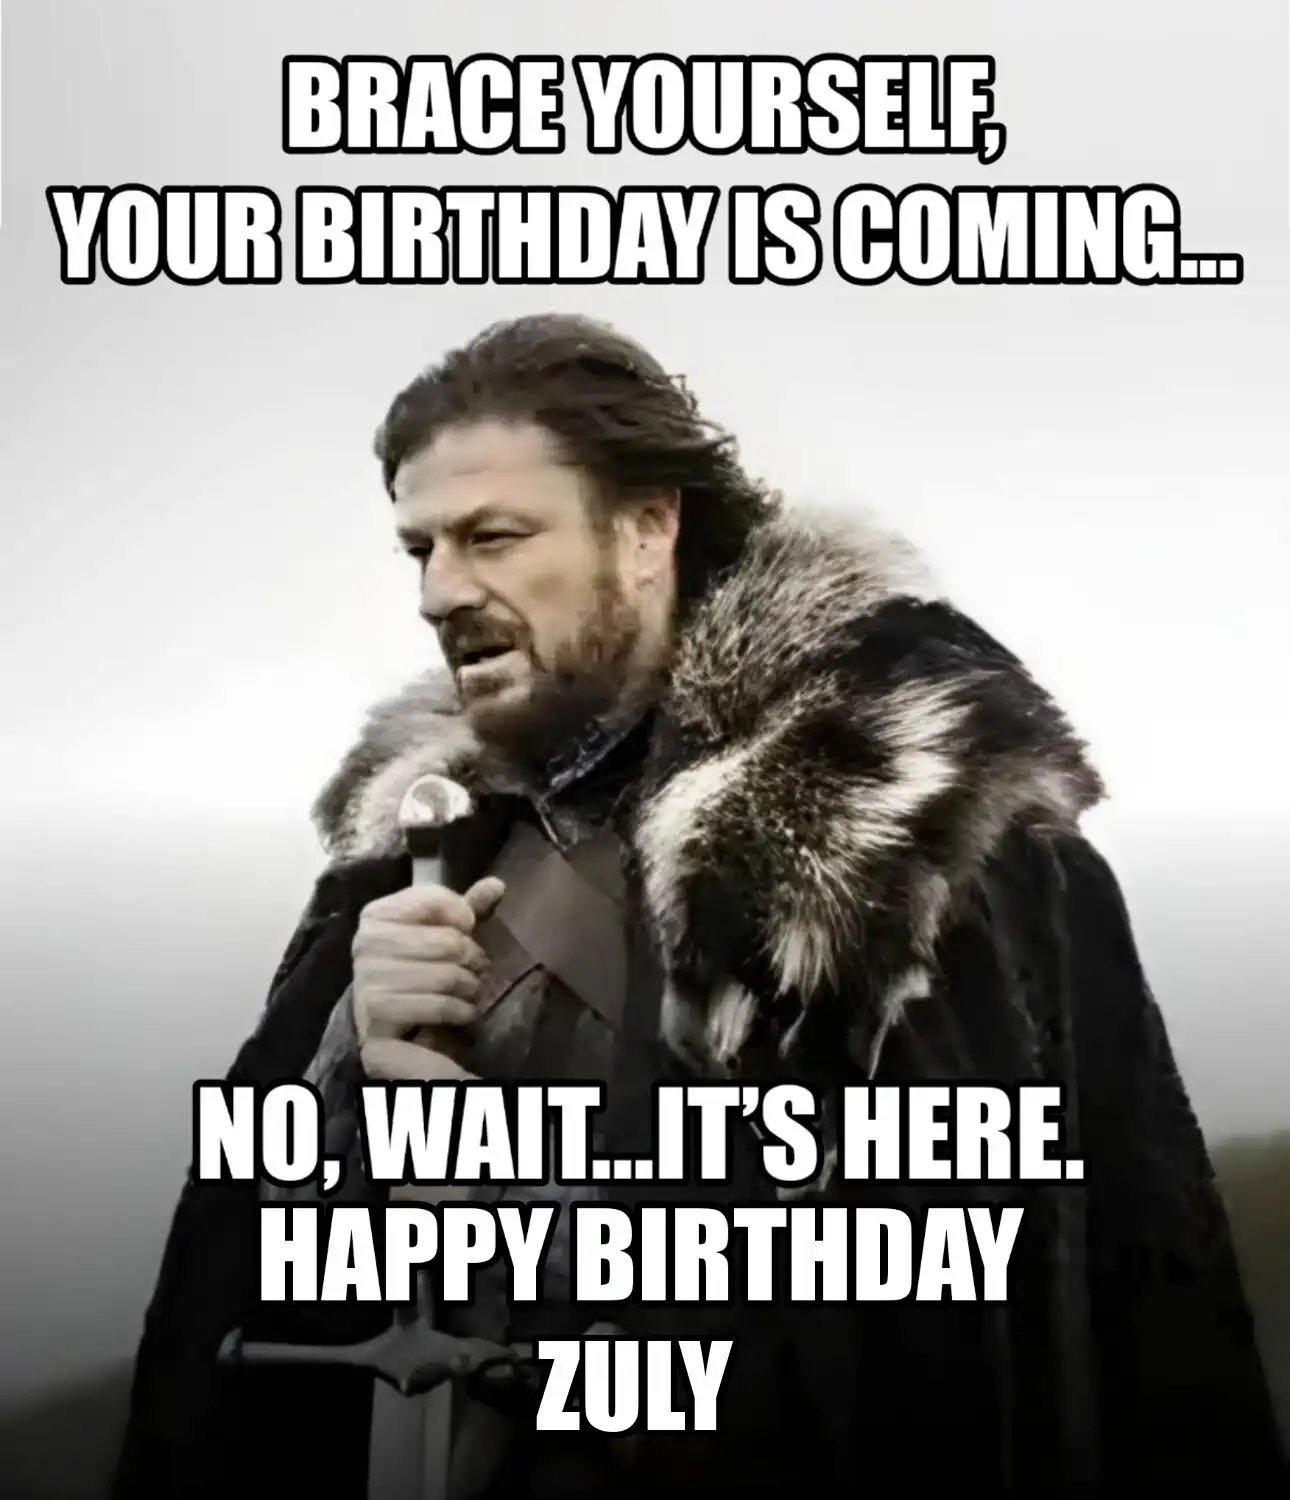 Happy Birthday Zuly Brace Yourself Your Birthday Is Coming Meme